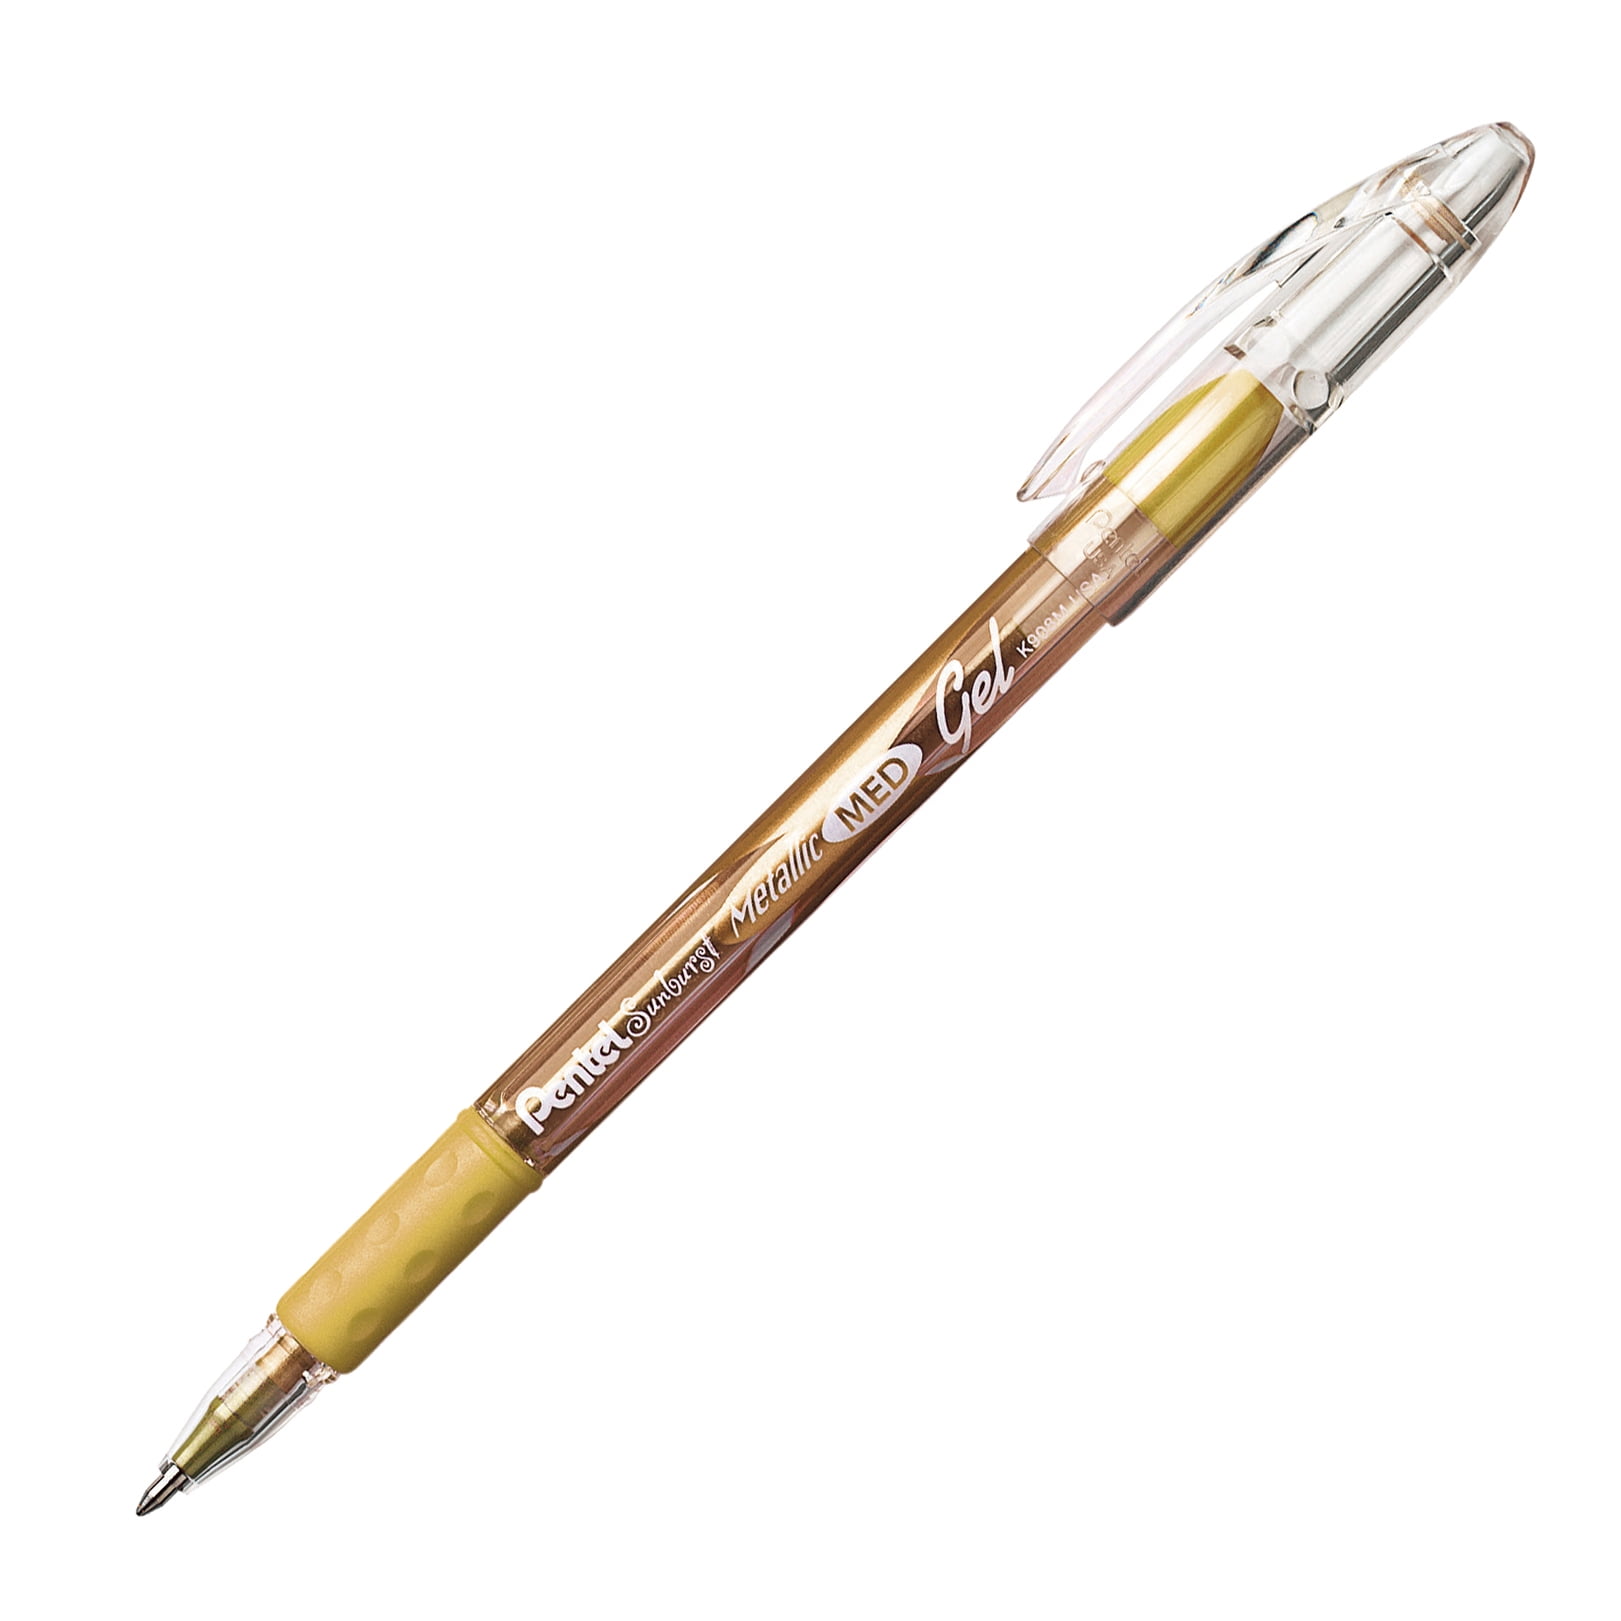 Sunburst Metallic Gel Pen, 2 Pack (Gold)